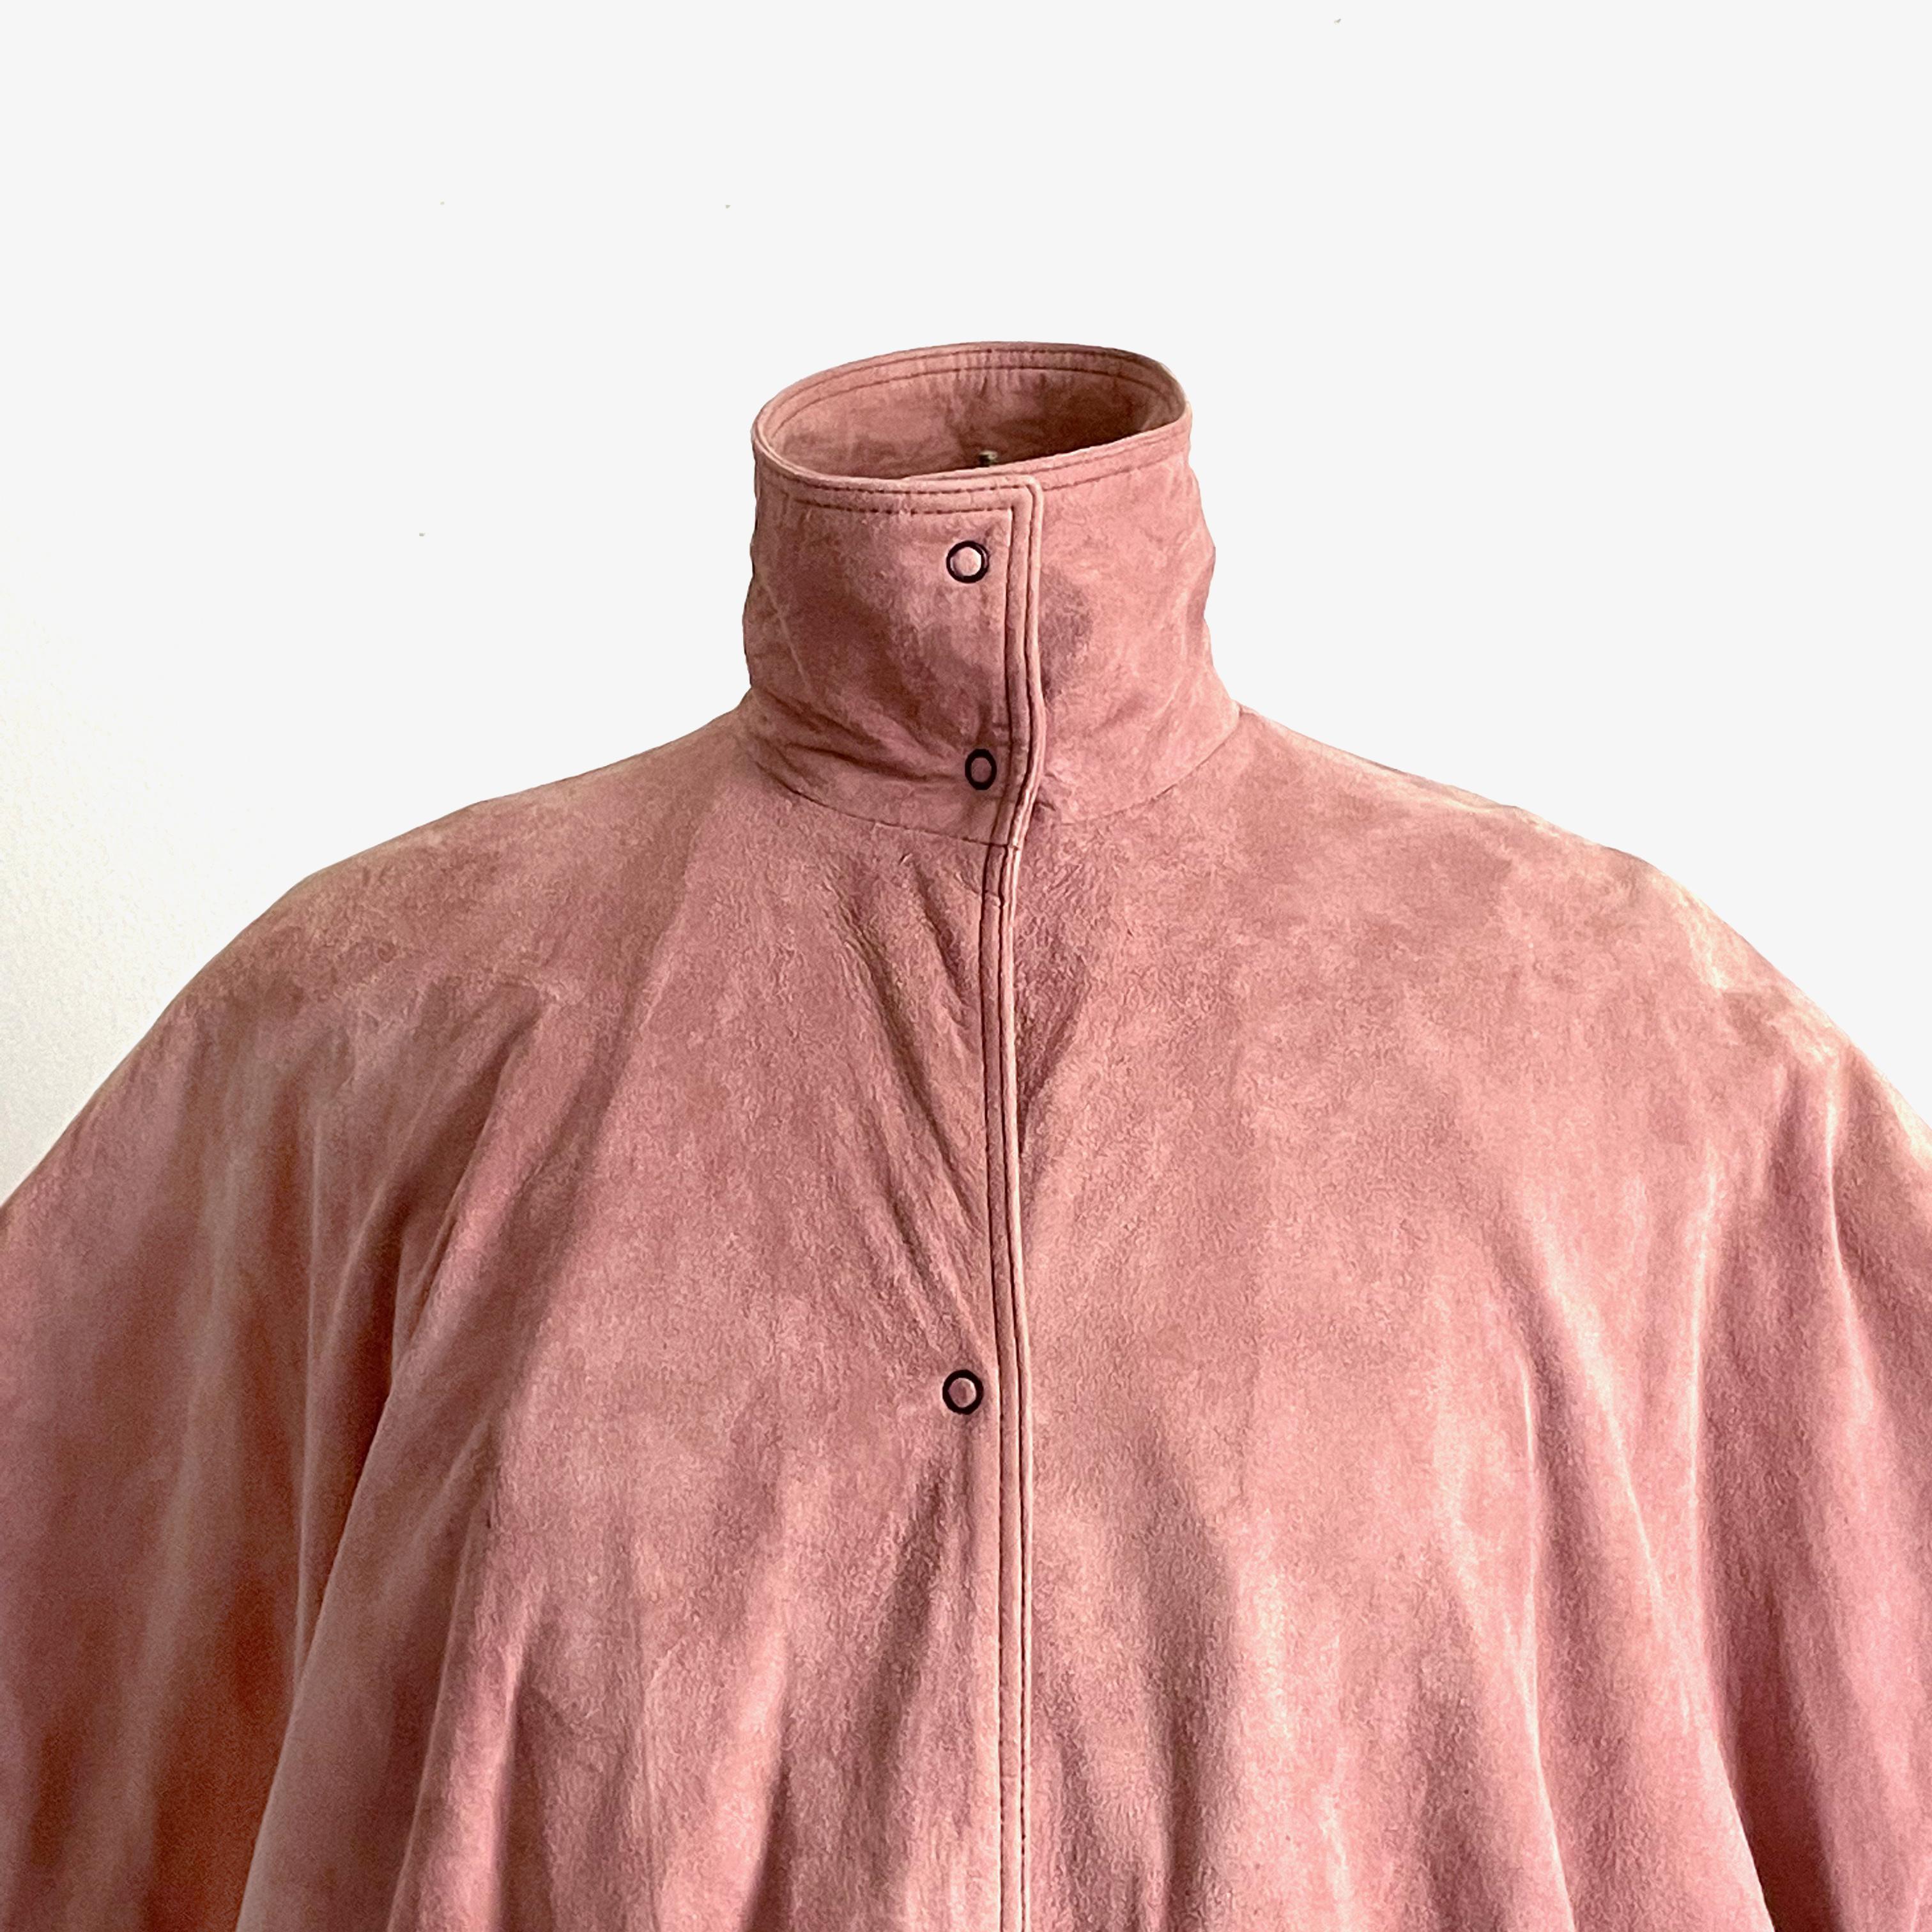 Fendi Duster Jacket Cocoon Coat Rose Pink Suede Batwing Sleeves Vintage Size S  For Sale 1